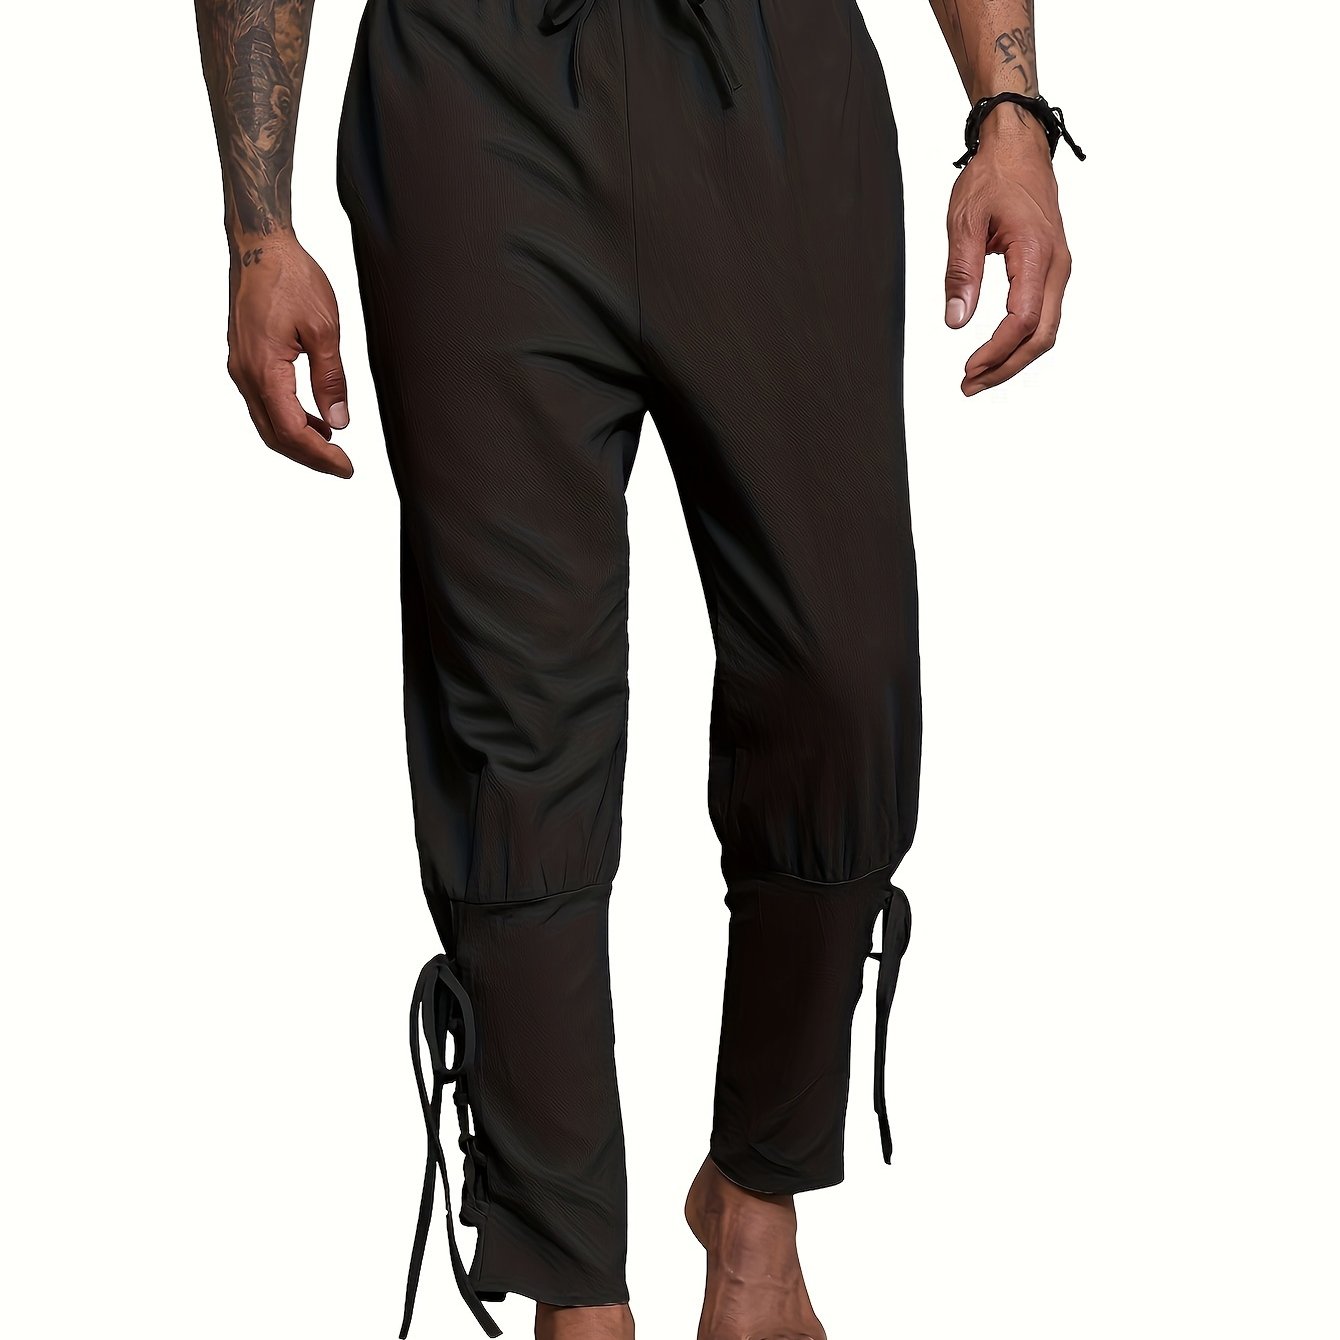 Steampunk Men's Drawstring Renaissance Pirate Viking Pants Beach Pant Retro Lace Up Trousers